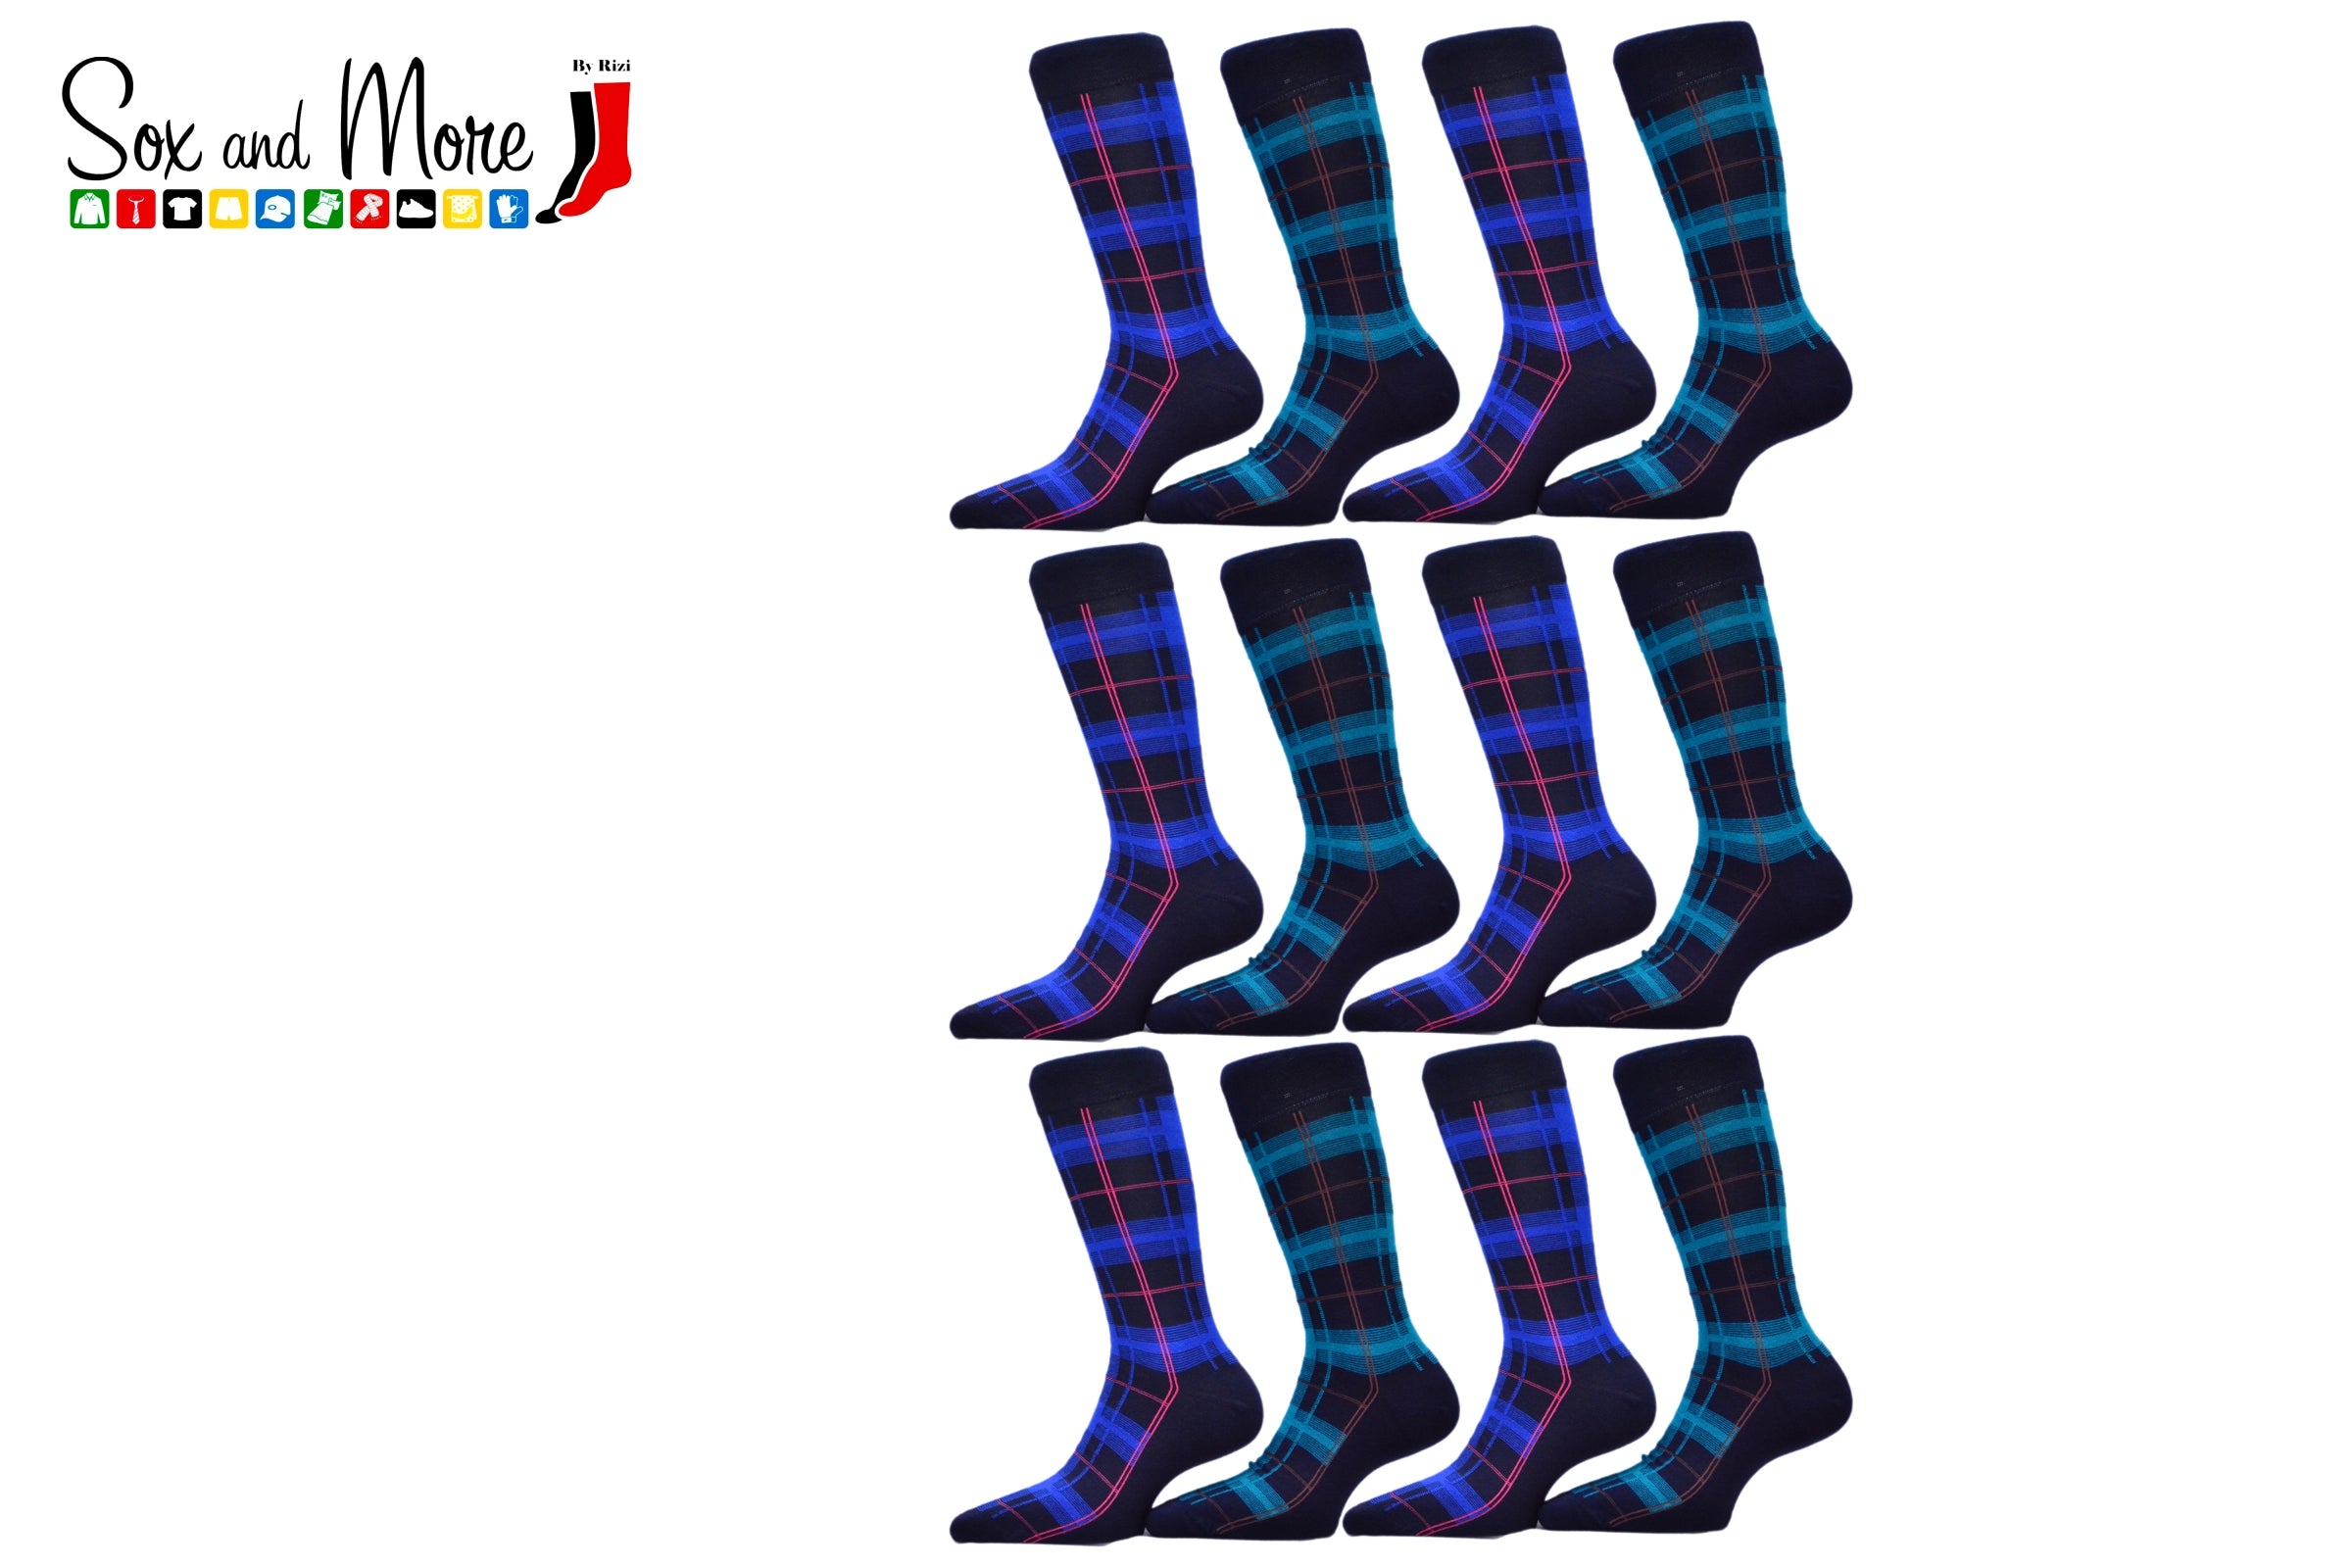 Men's Tencel Socks